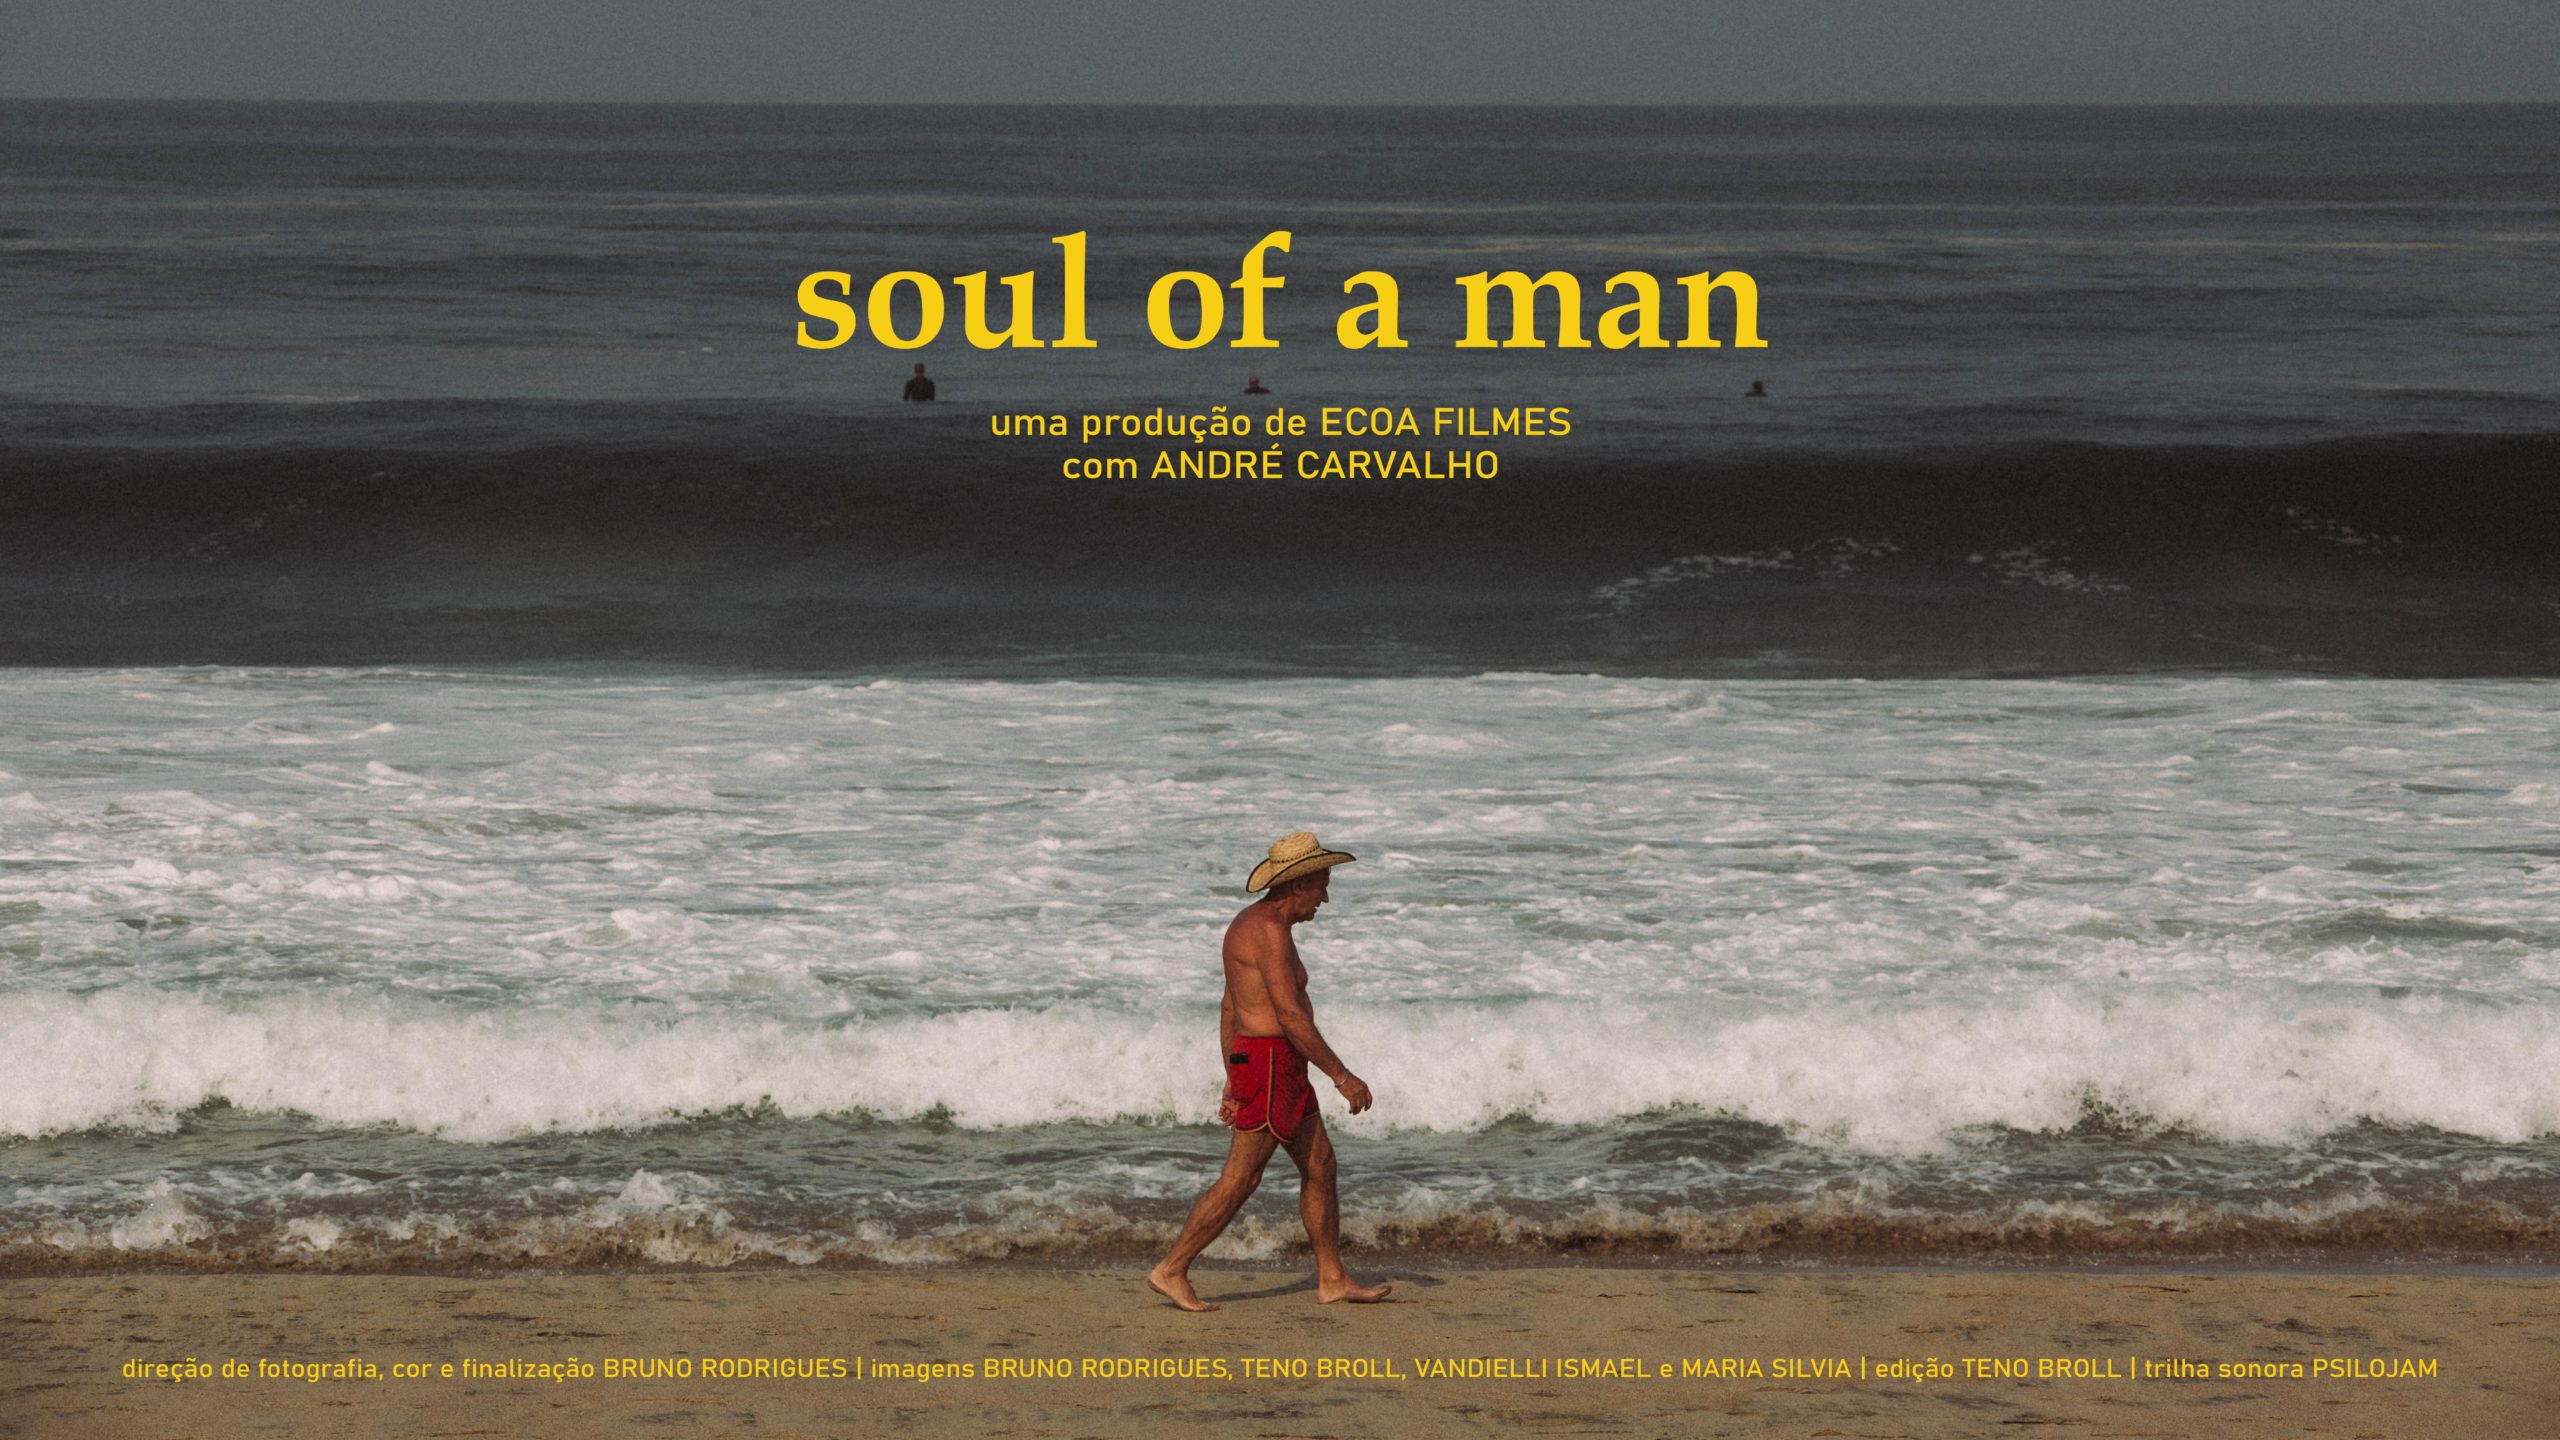 CAPA 02_SOUL OF A MAN_amarelo - Maria Luiza Ishimoto